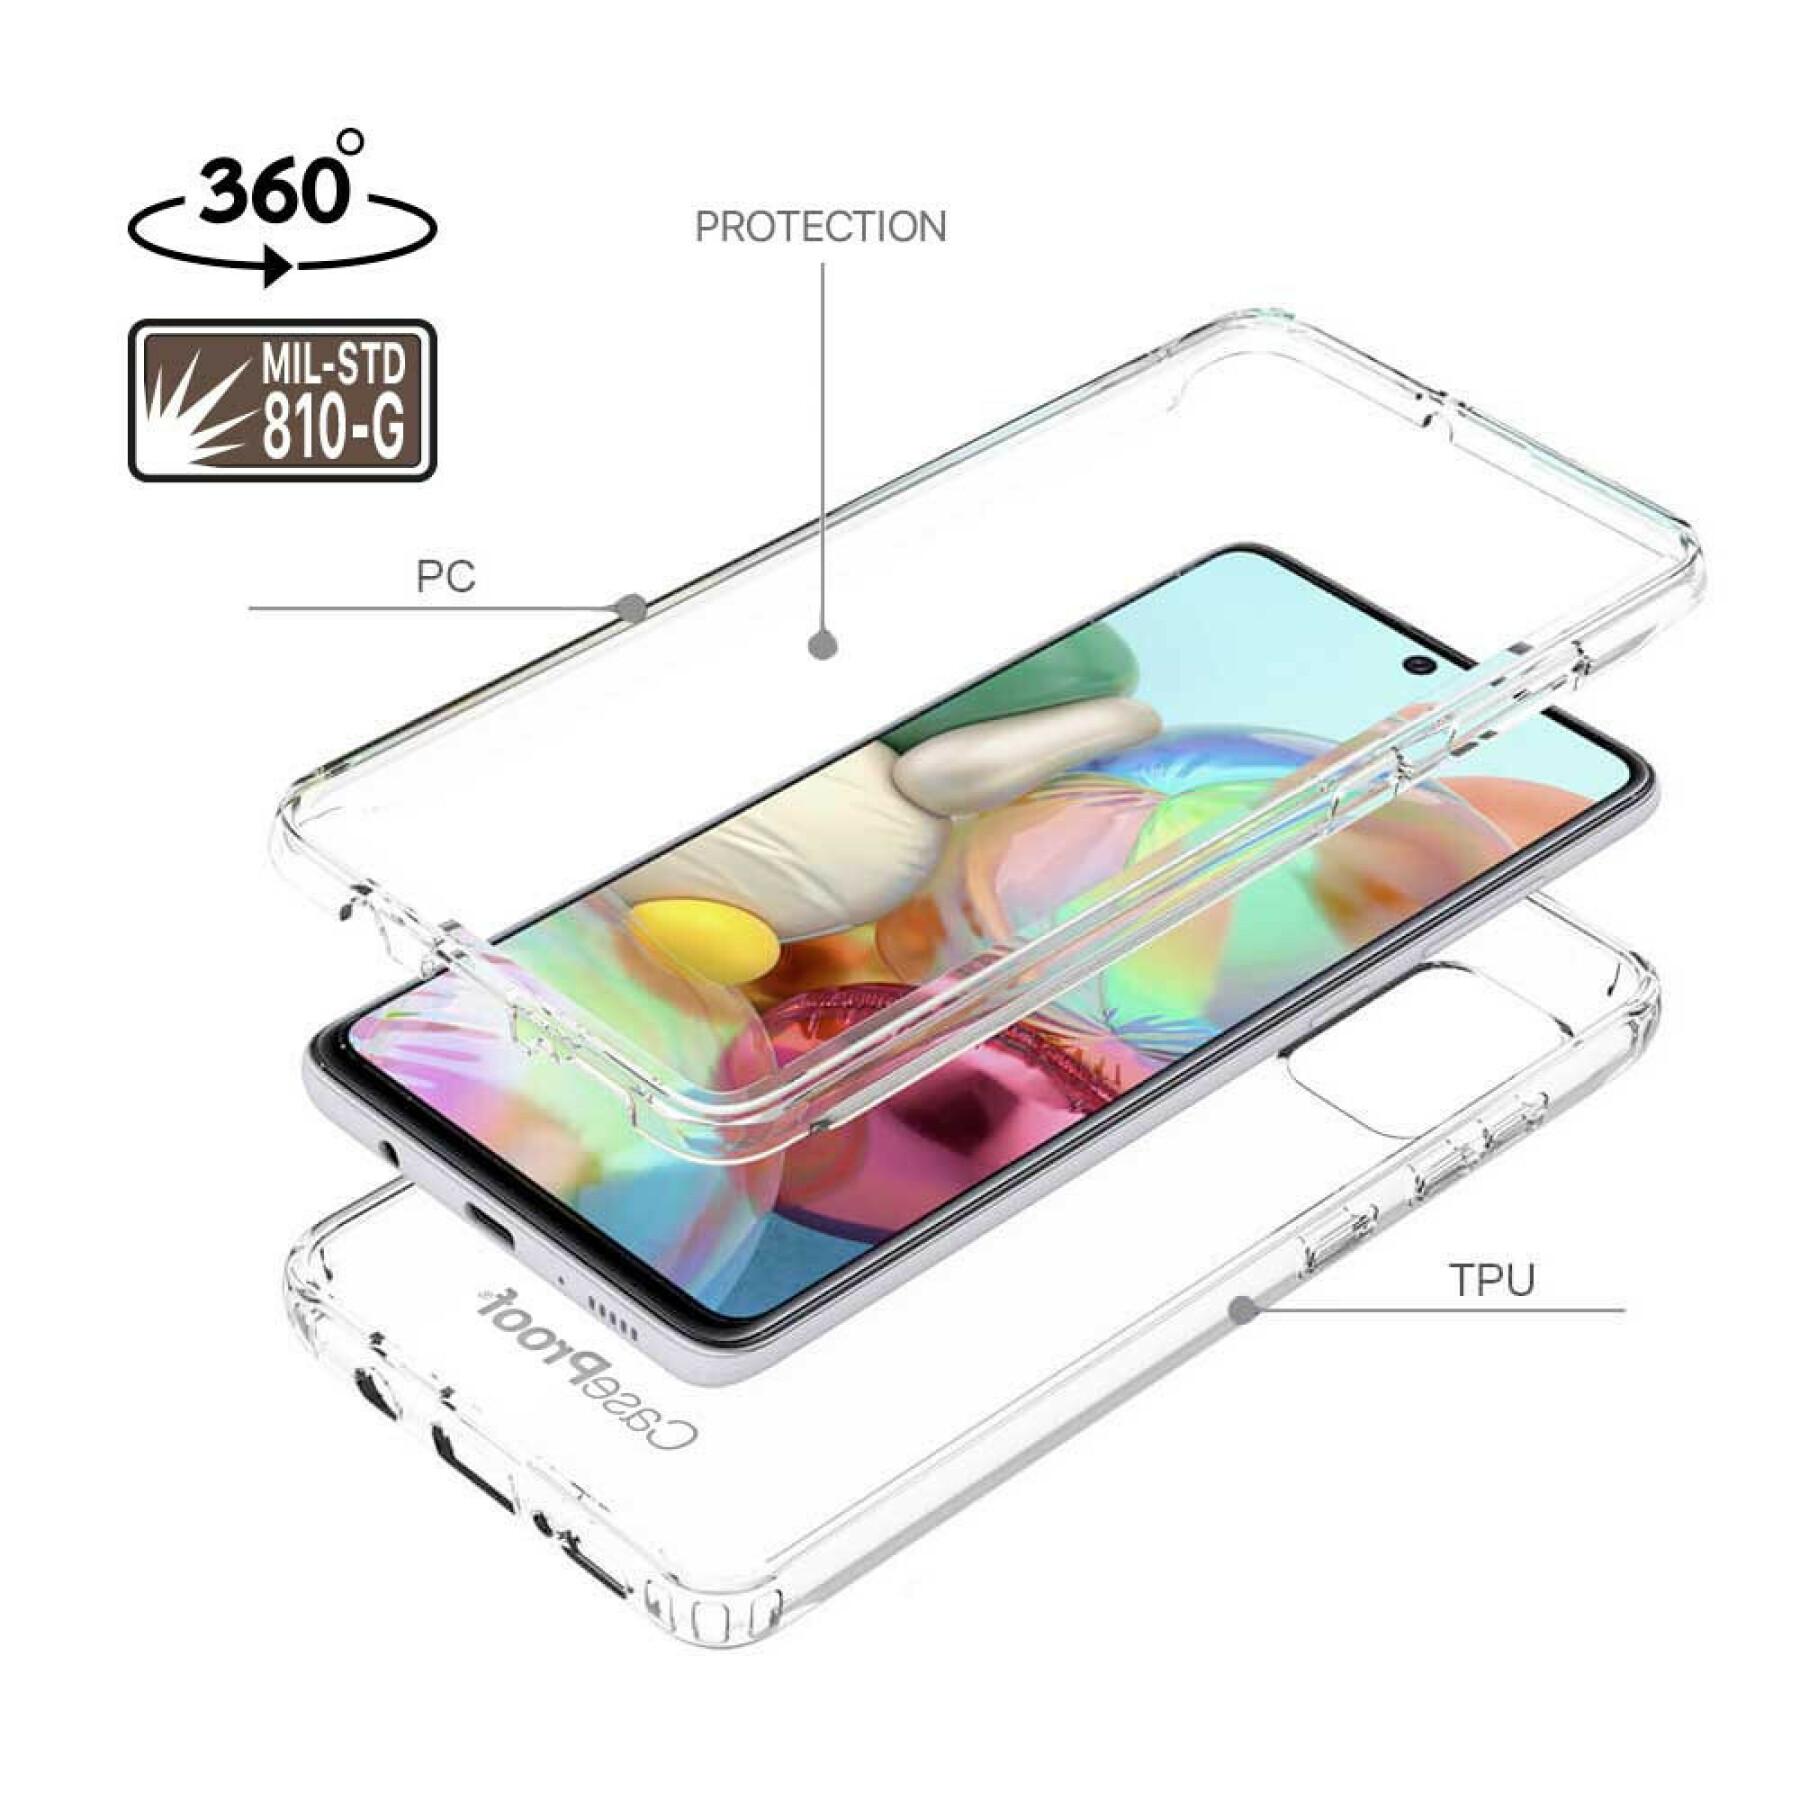 Coque smartphone Samsung A 71 protéction 360°antichoc CaseProof Shock